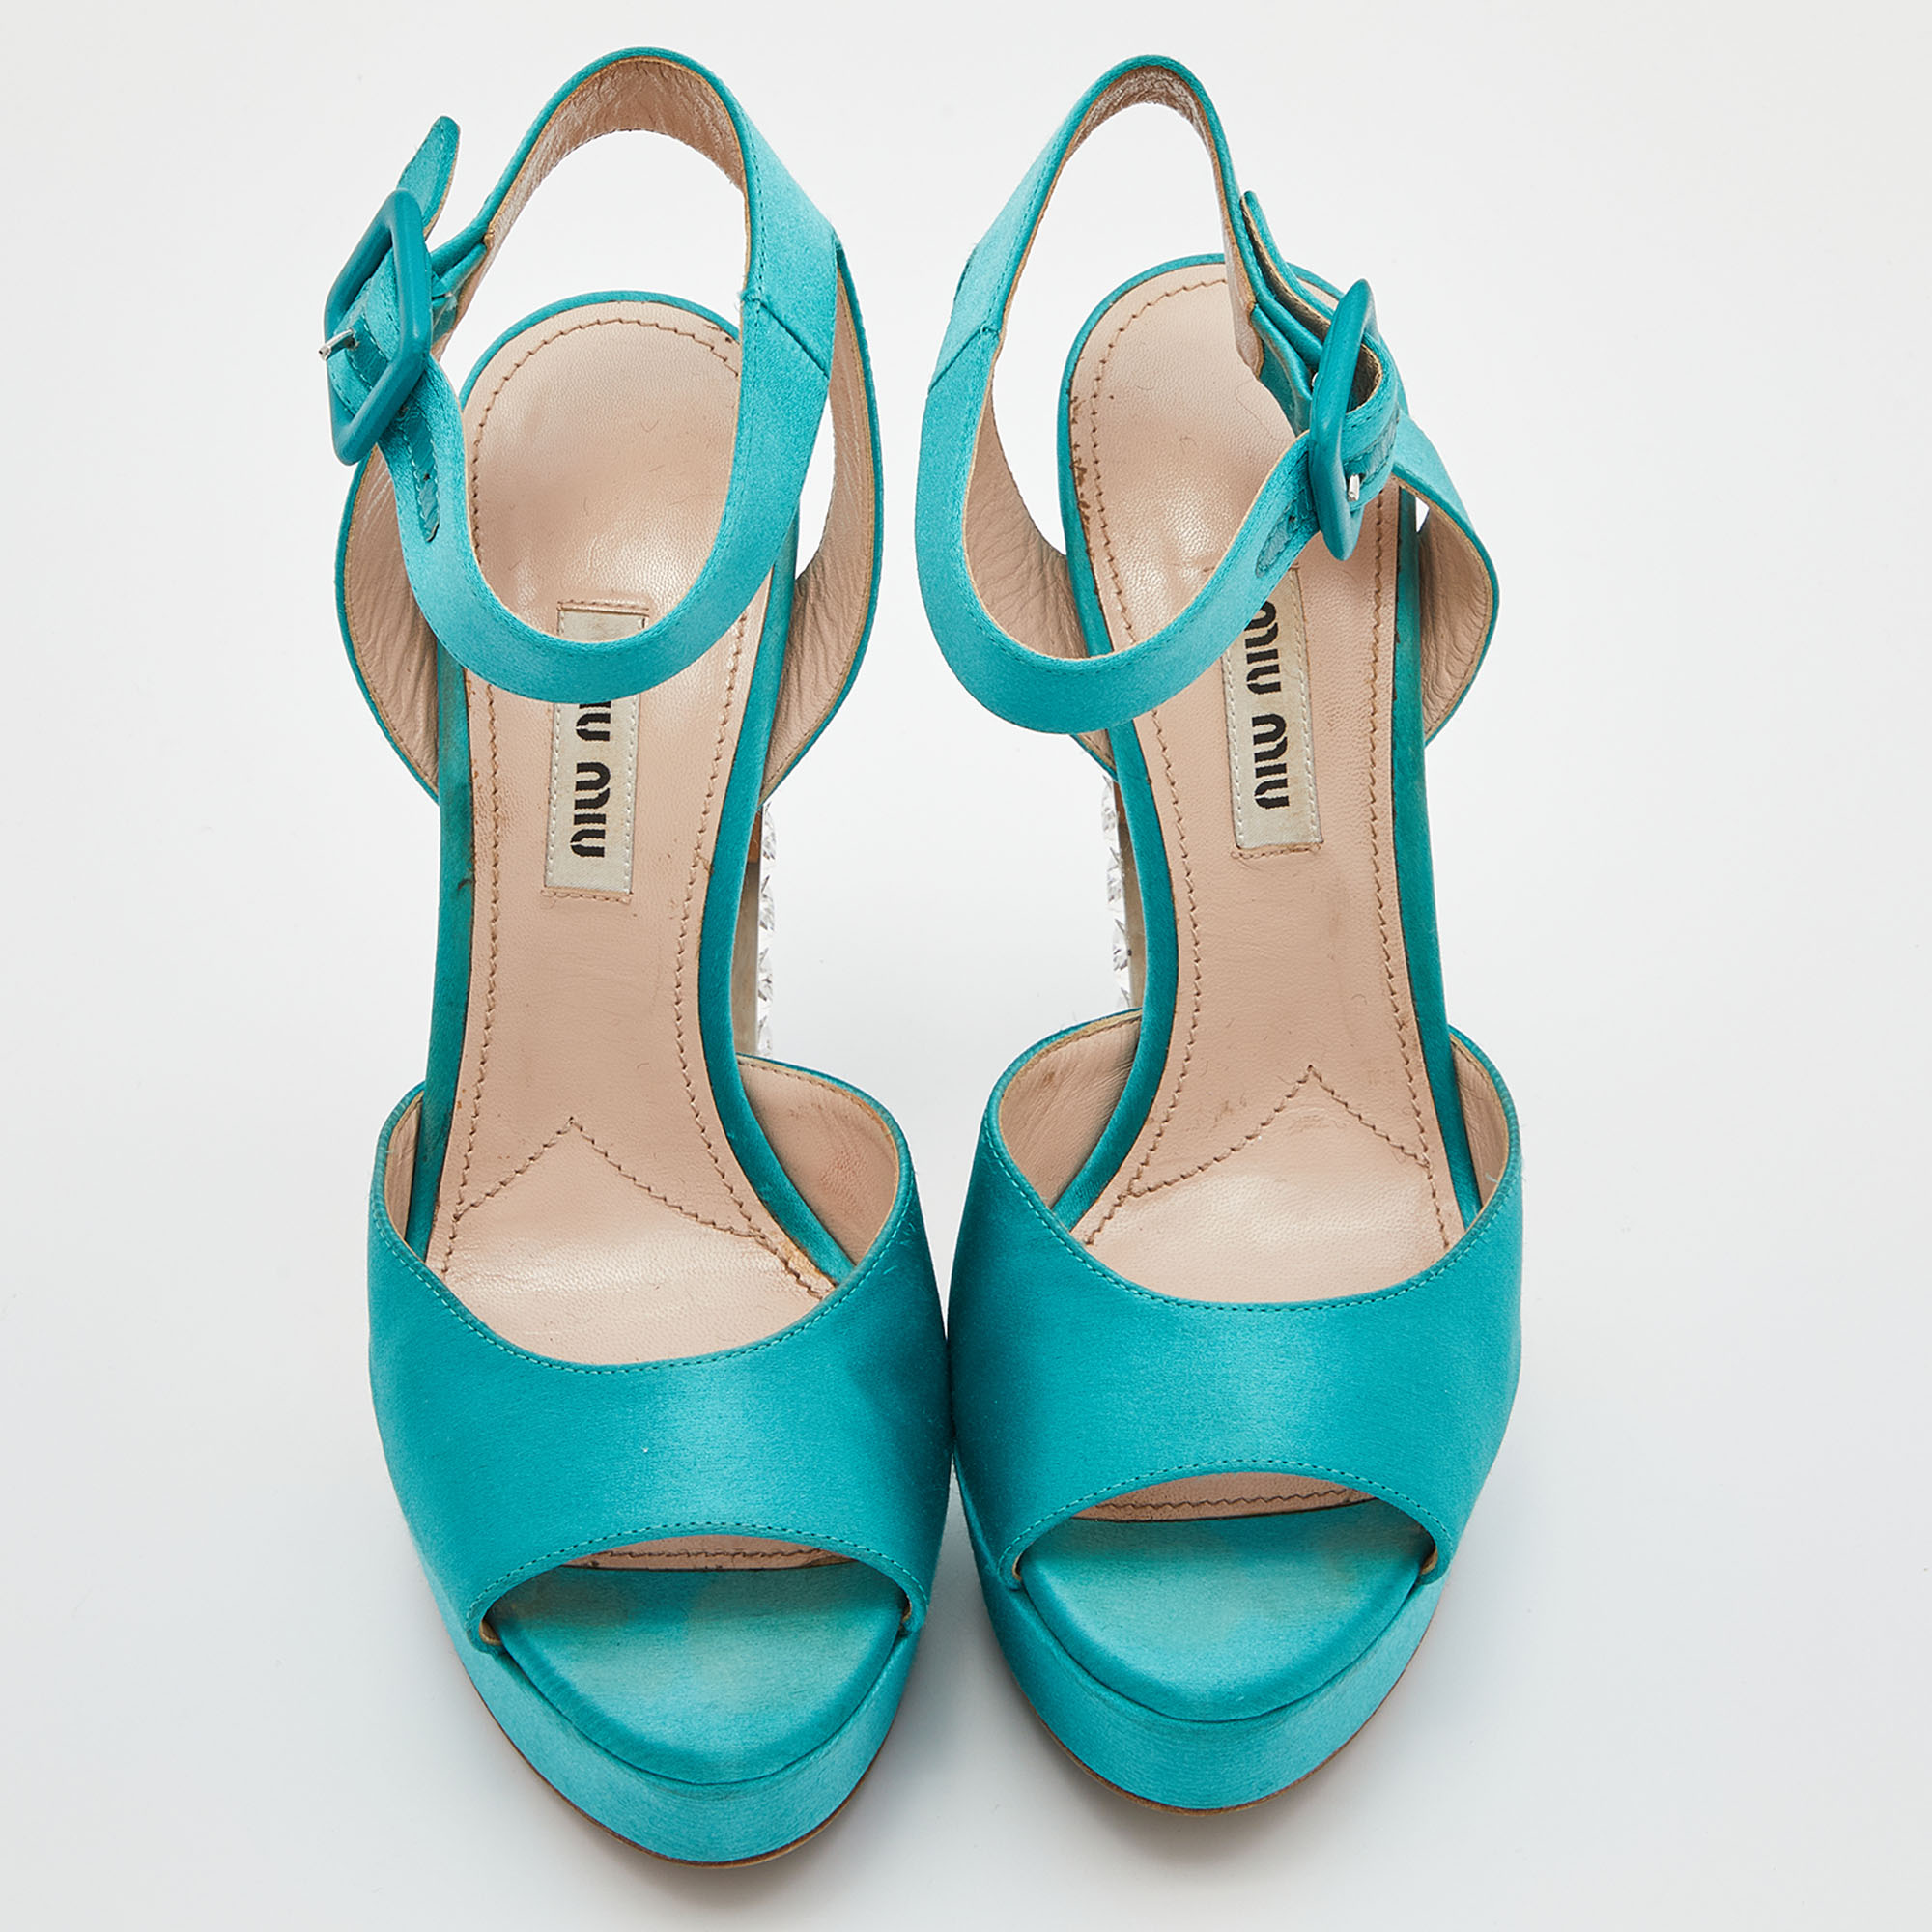 Miu Miu Green Satin Crystal Embellished Block Heel Ankle Strap Sandals Size 37